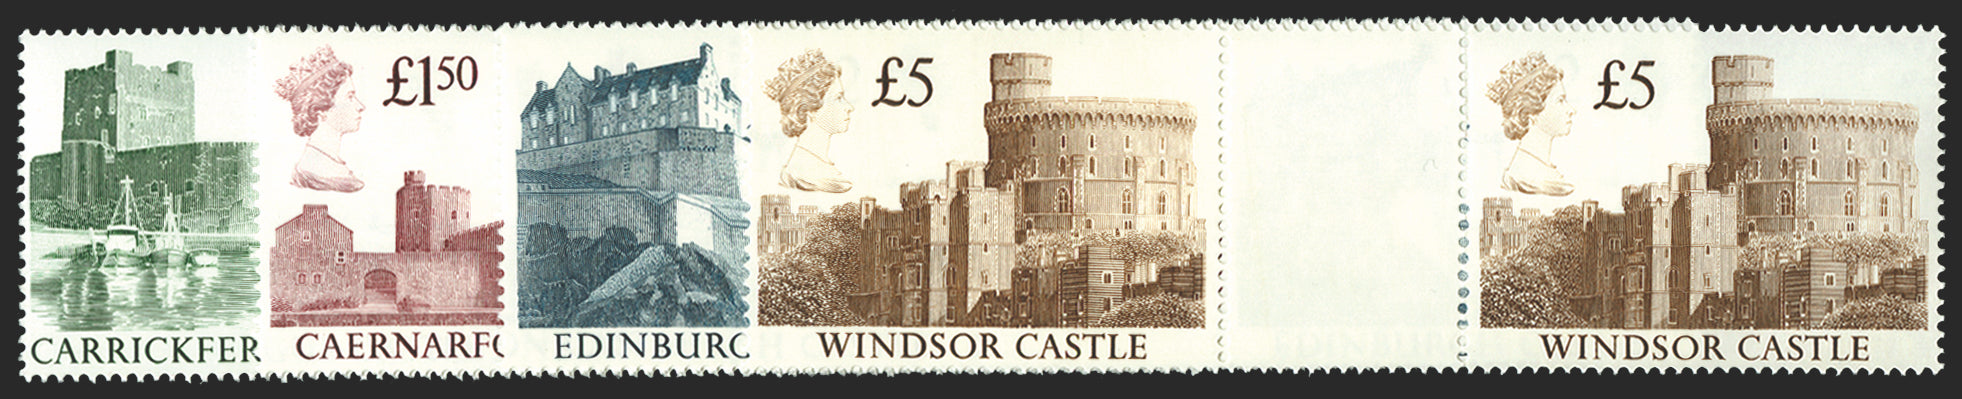 Great Britain 1988 £1-£5 "Castles", SG1410/3